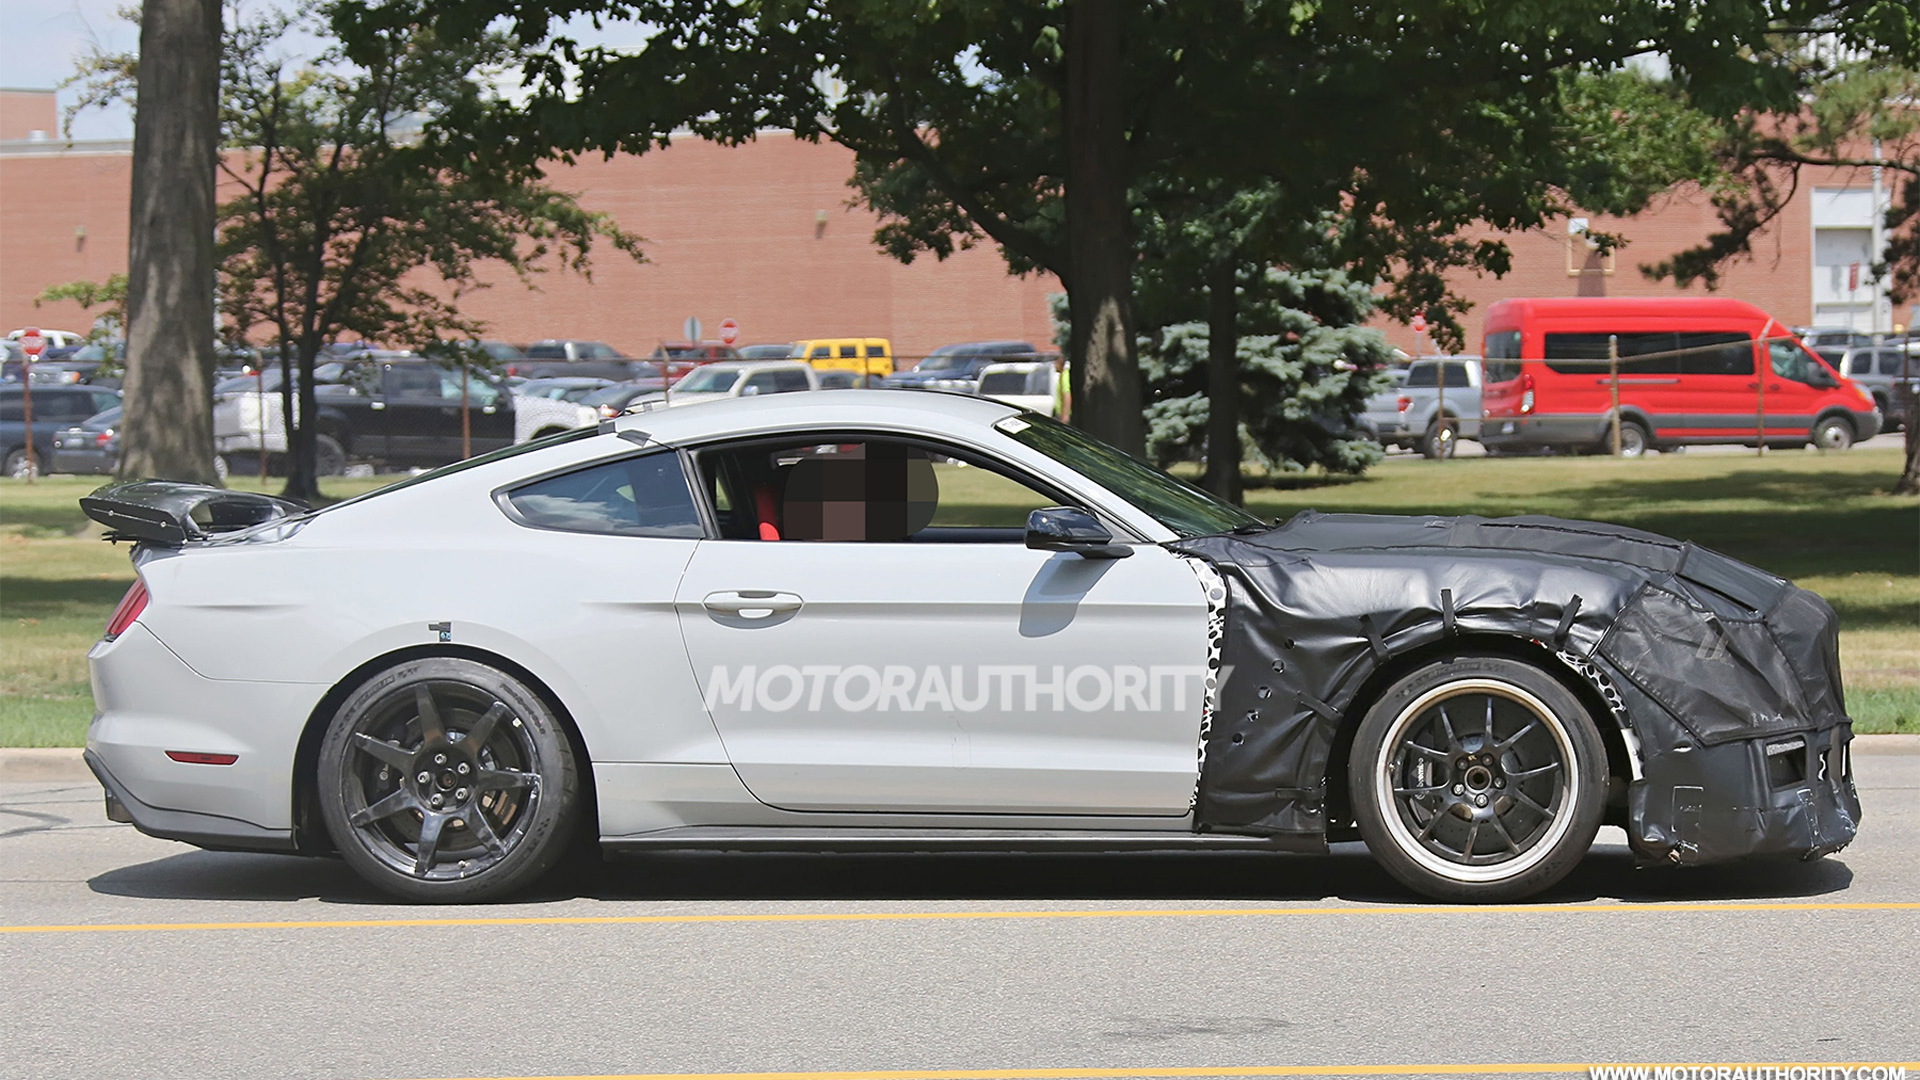 2020 Ford Mustang Shelby GT500 spy shots - Image via S. Baldauf/SB-Medien